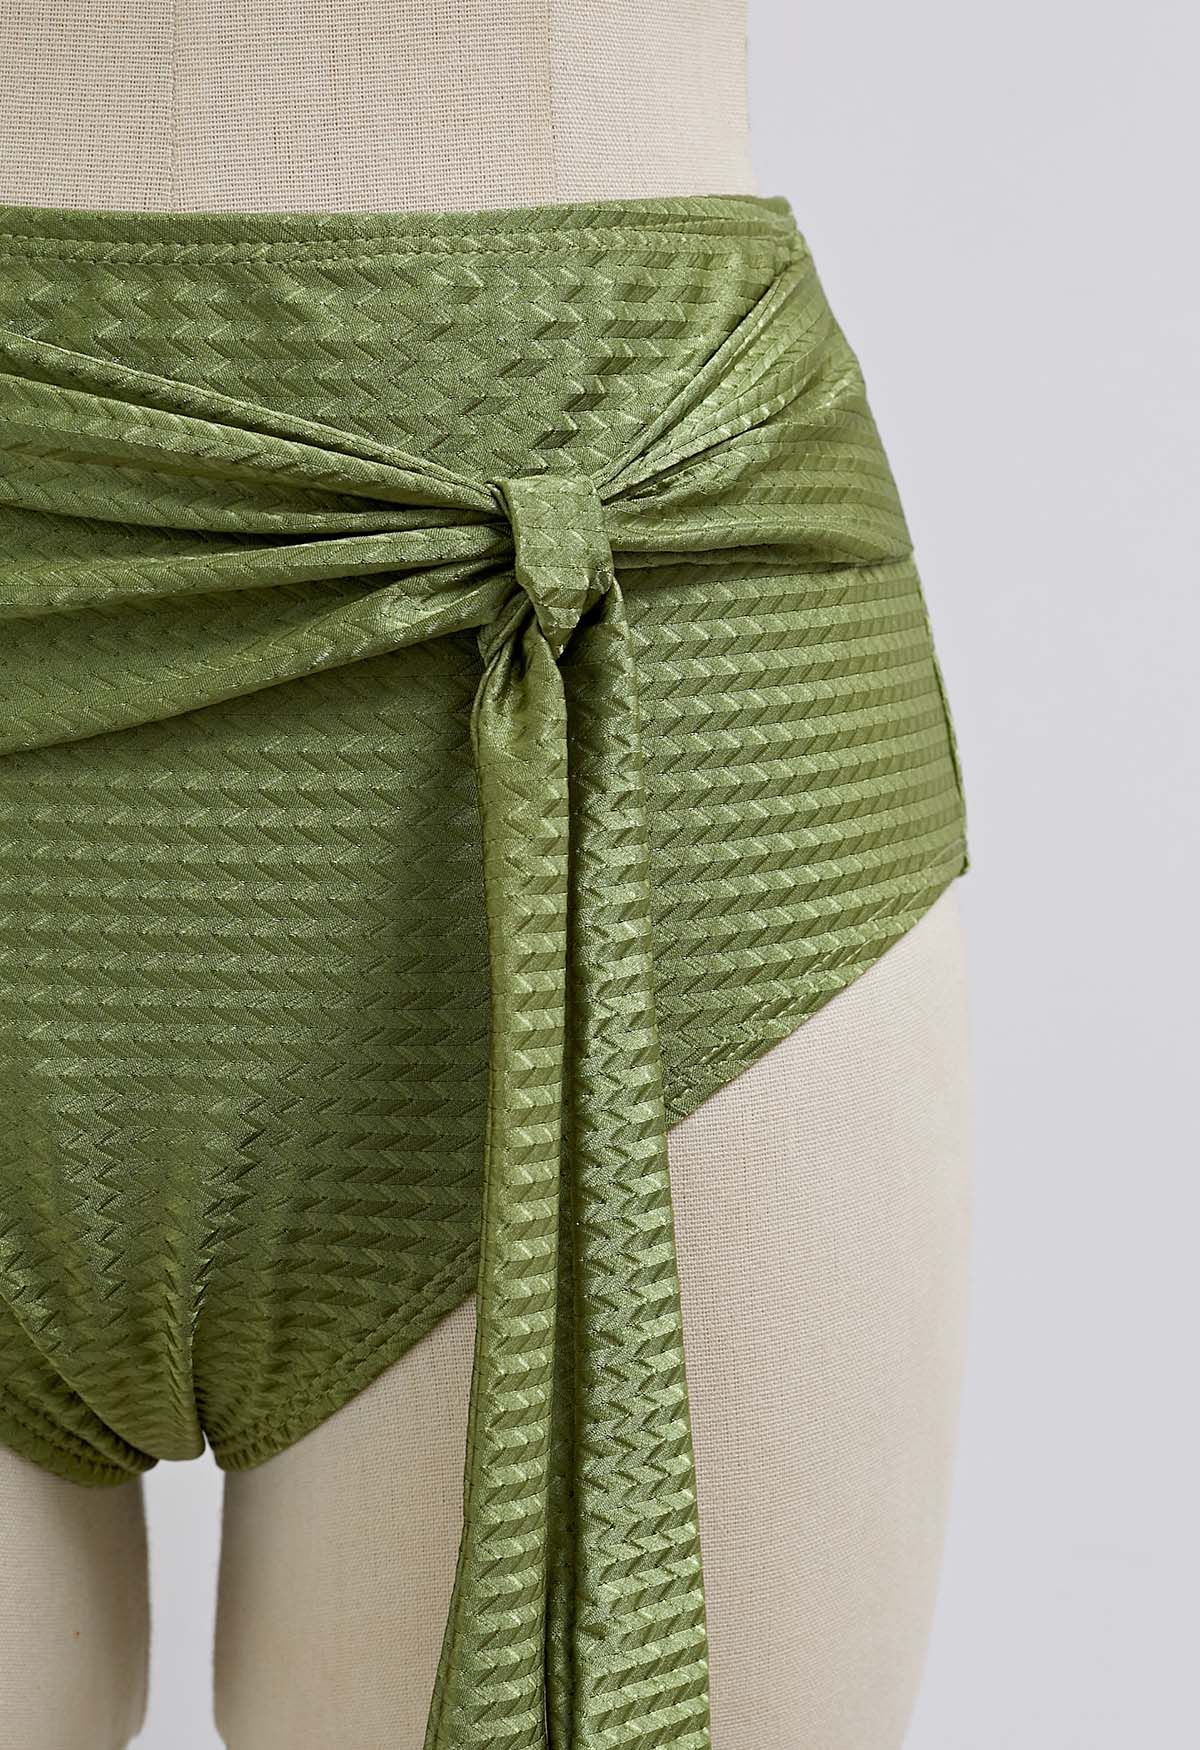 Resin Bead Asymmetric Straps Bowknot Bikini Set in Army Green